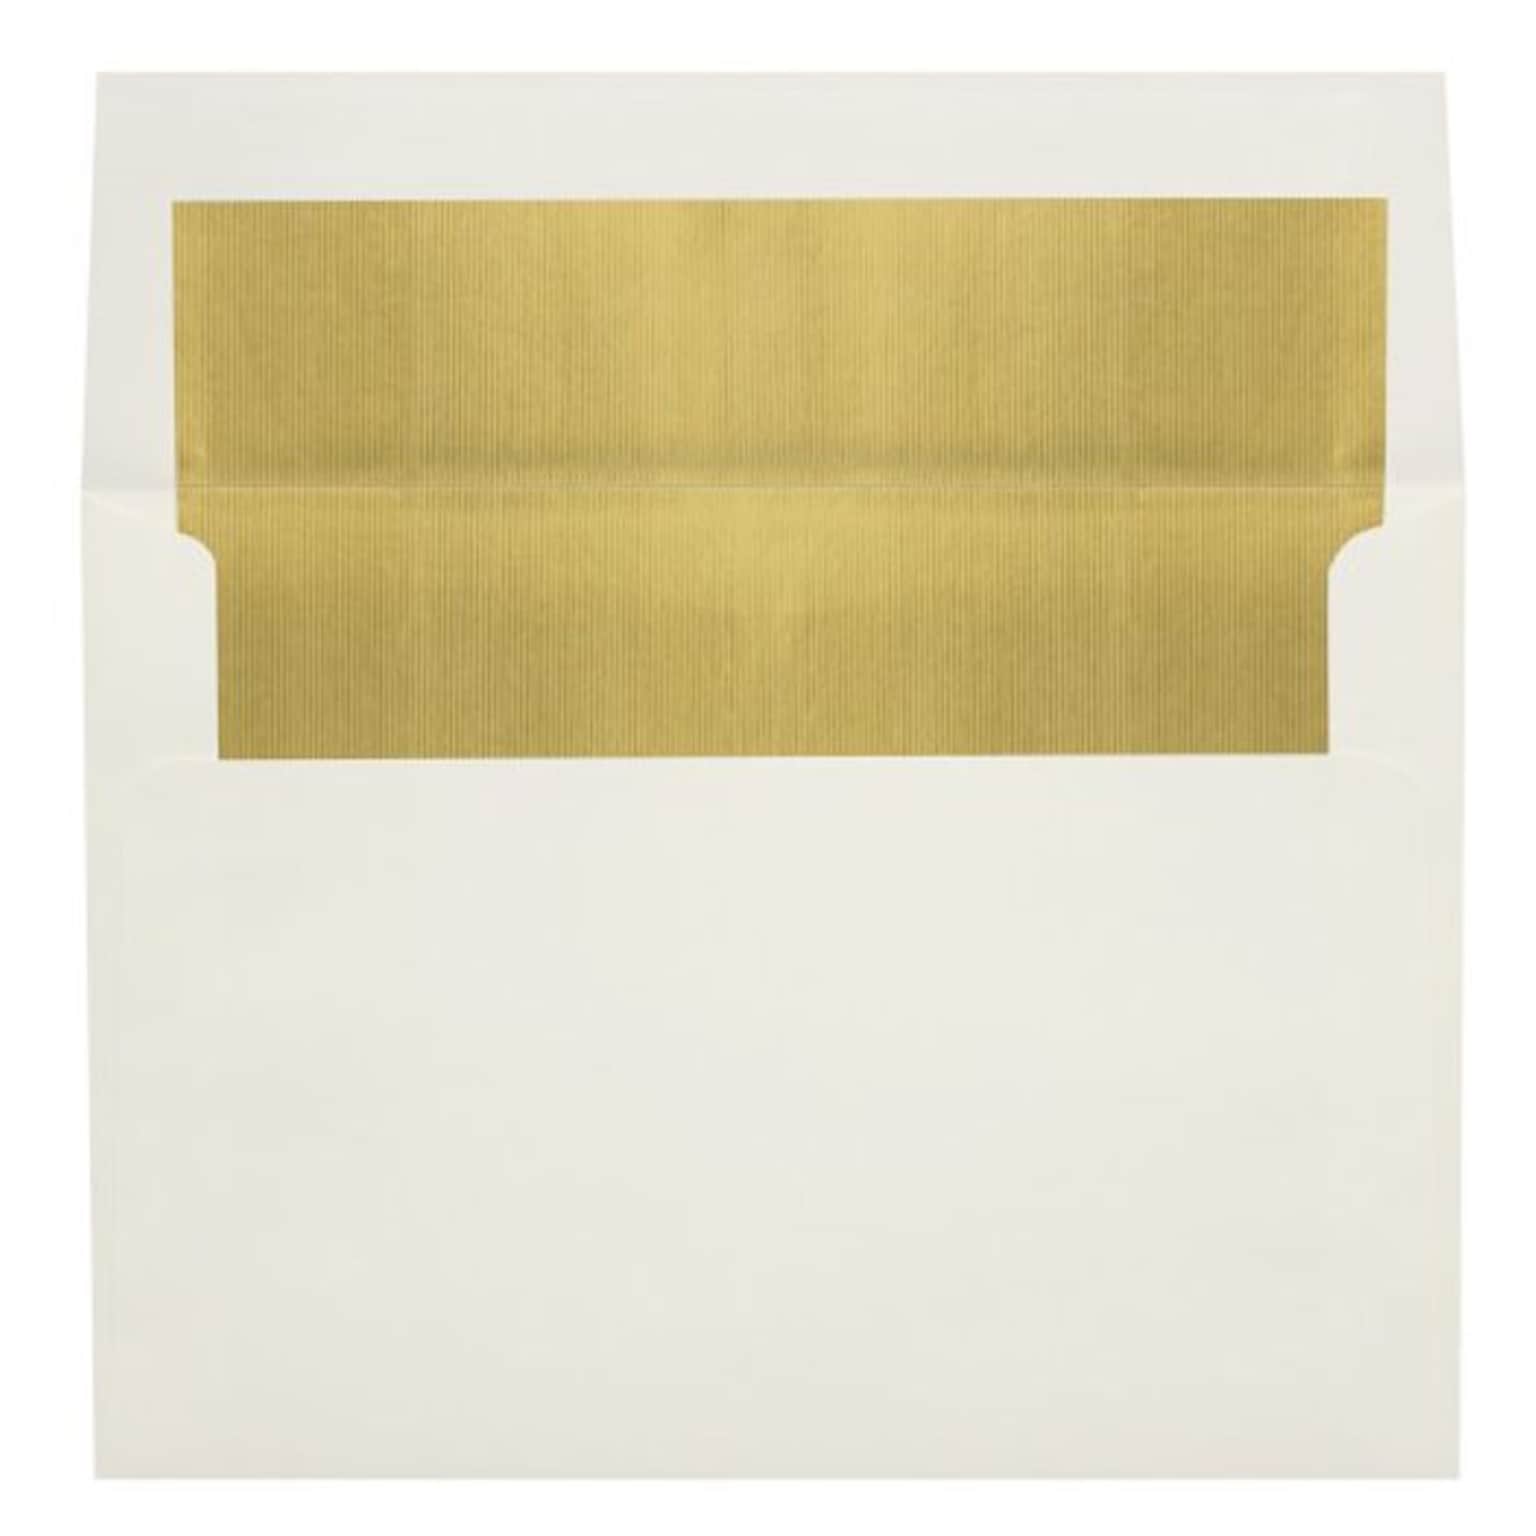 LUX® 70lb5 1/4x7 1/4 Square Flap Envelopes W/Peel&Press; Natural W/Gold LUX, 500/BX